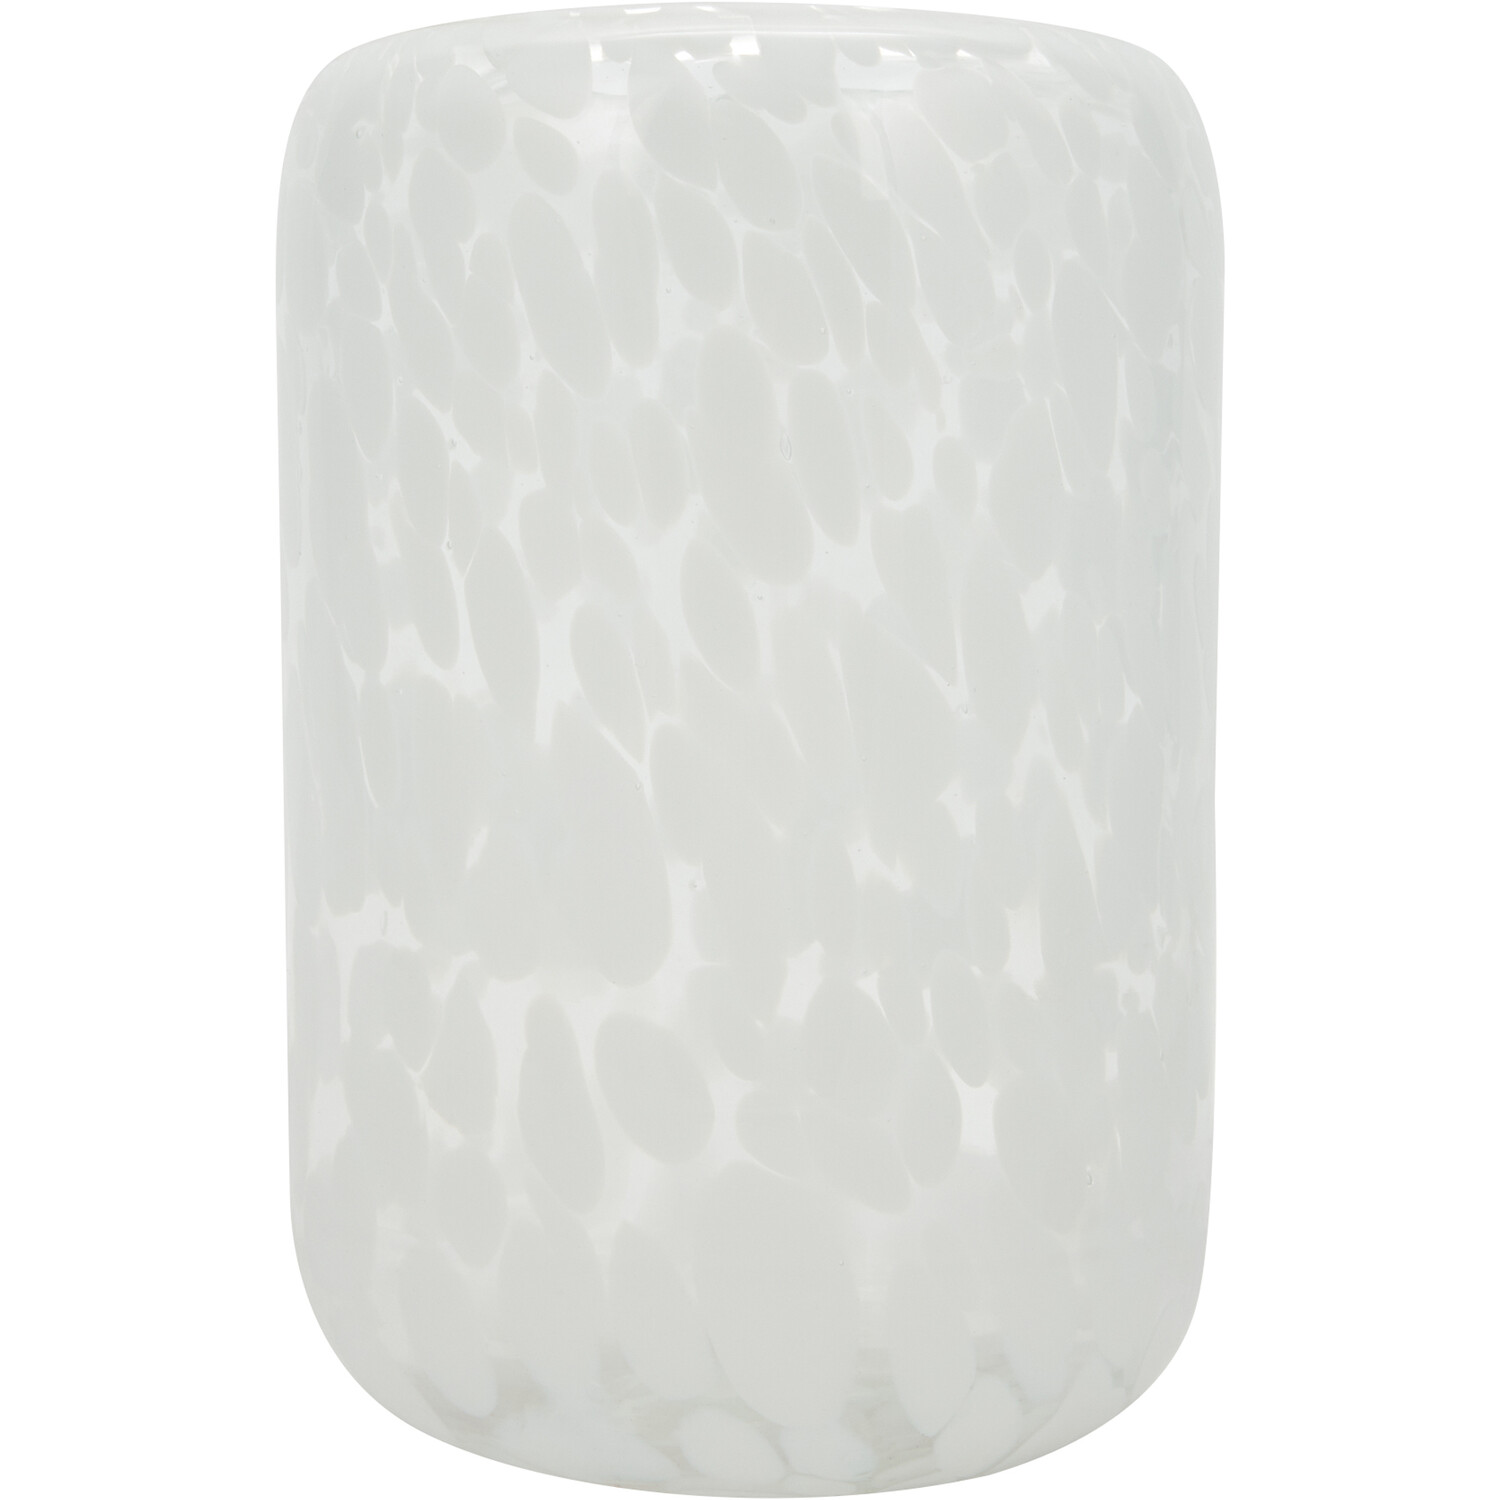 Confetti Vase - White Image 1